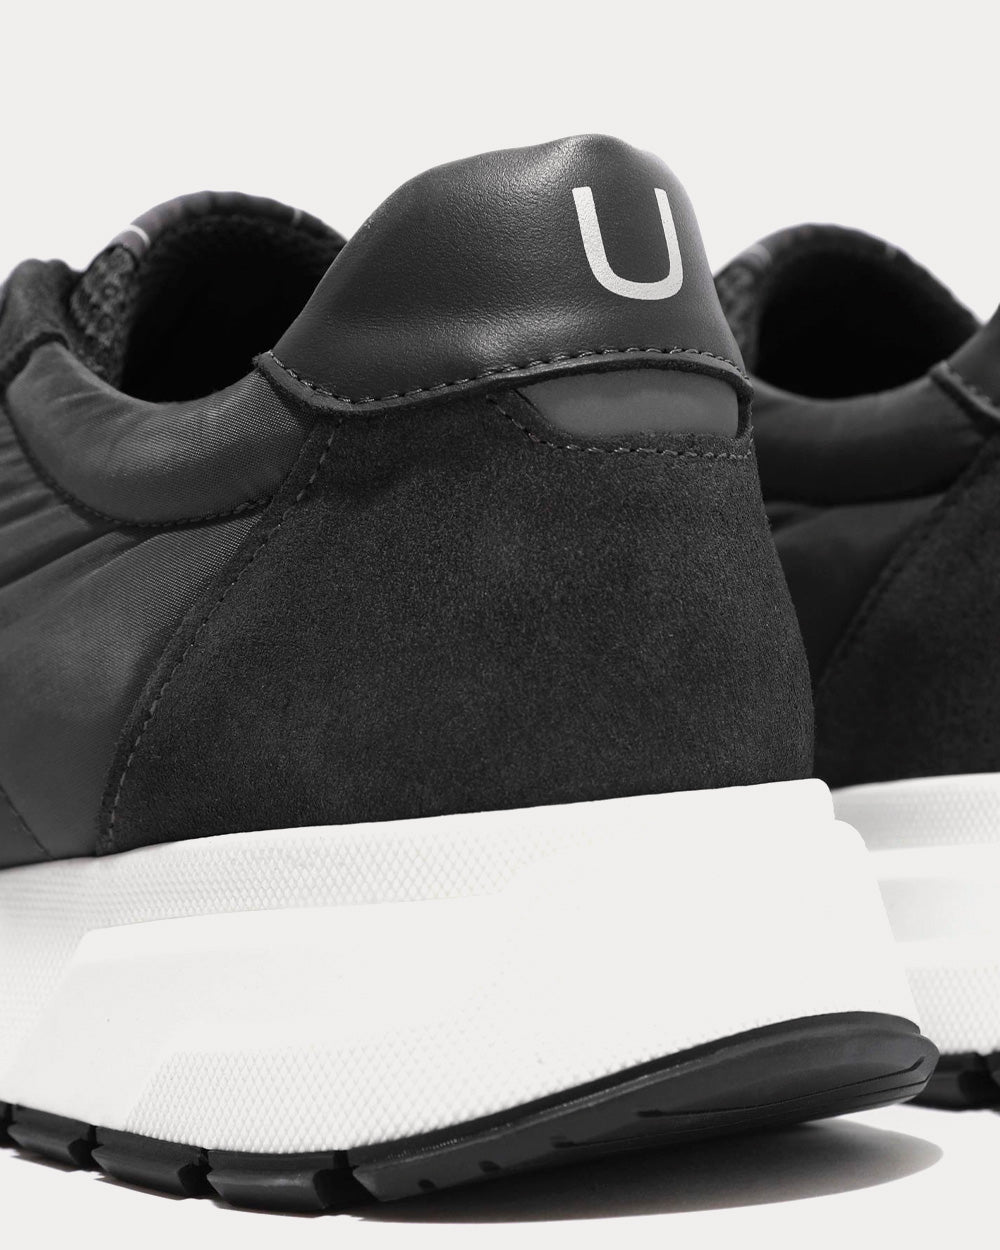 Unlike Humans - UHF04 Runner Nylon Mesh Dark Grey Low Top Sneakers